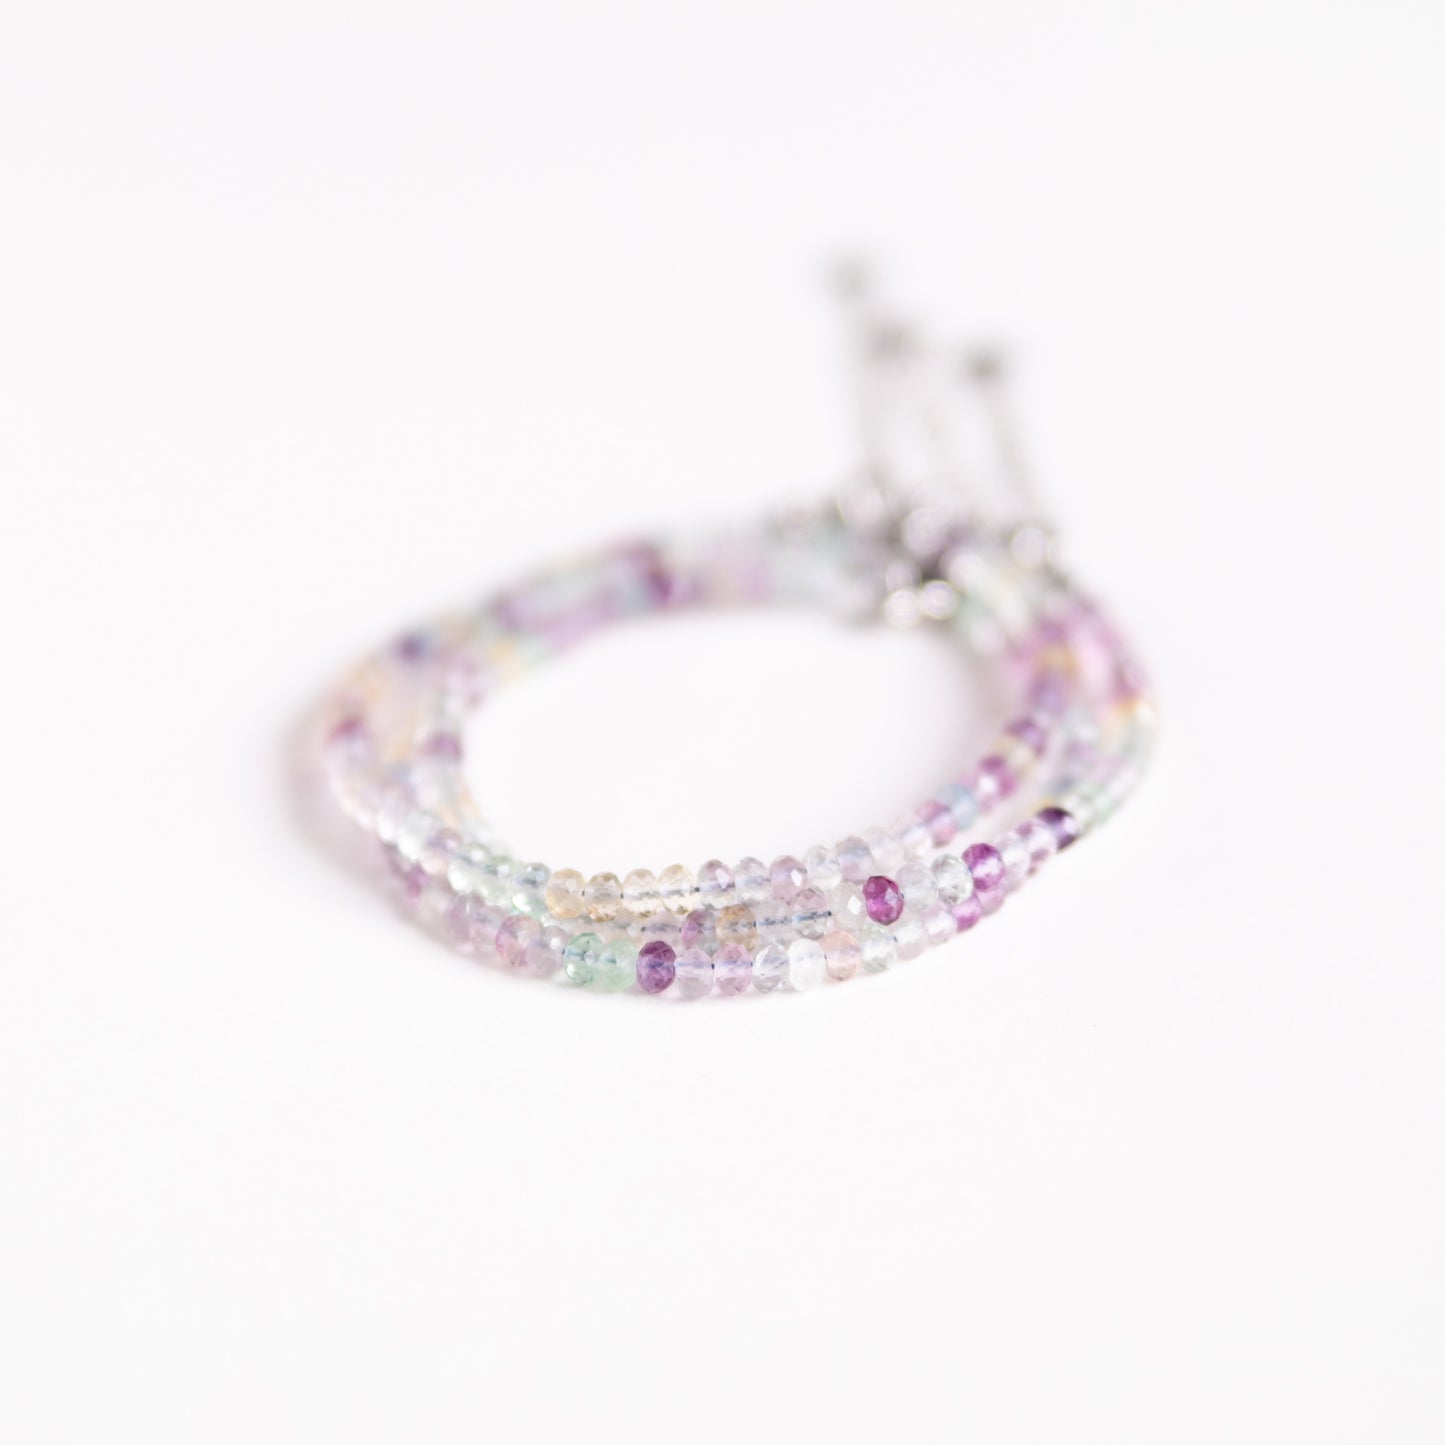 Microfaceted Rainbow Fluorite Bracelet